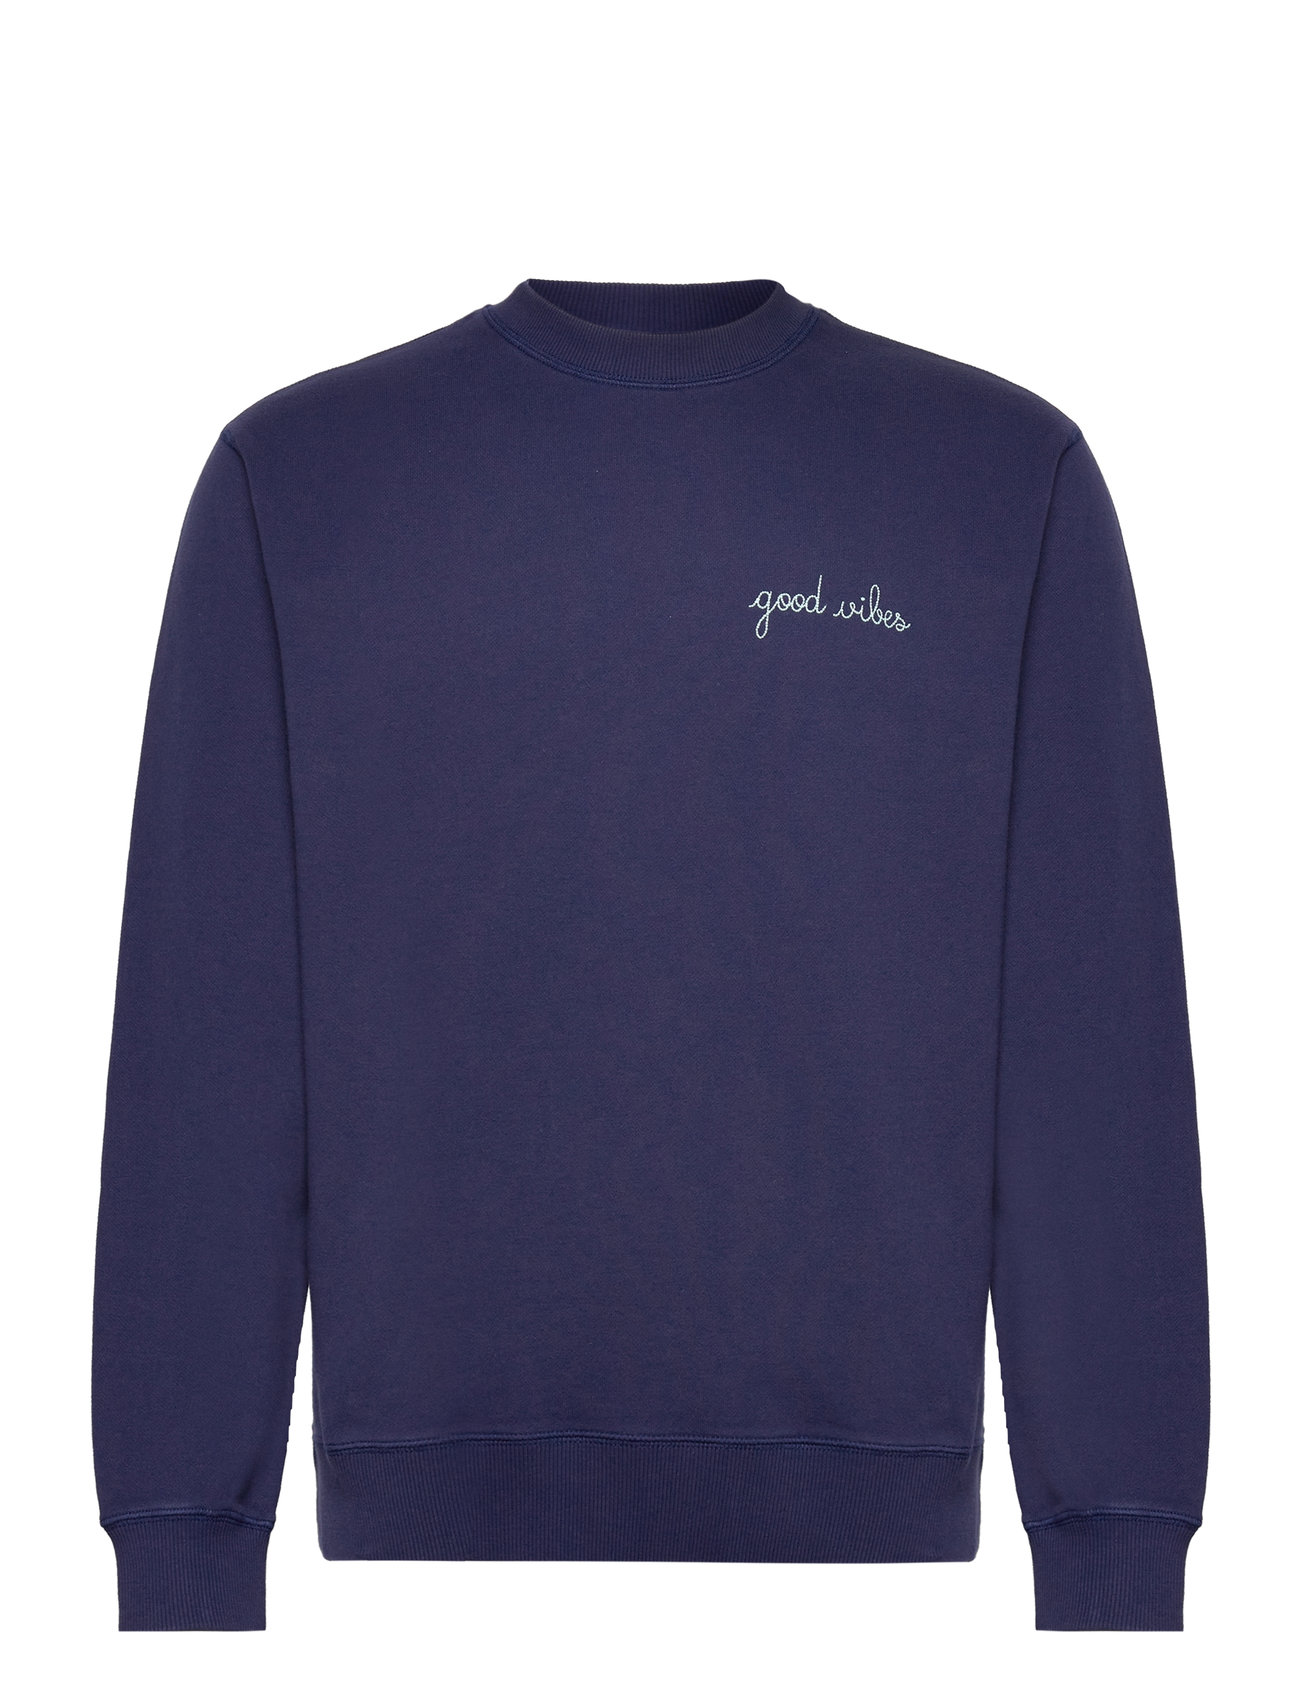 Charonne Good Vibes/Gots Designers Sweatshirts & Hoodies Sweatshirts Navy Maison Labiche Paris